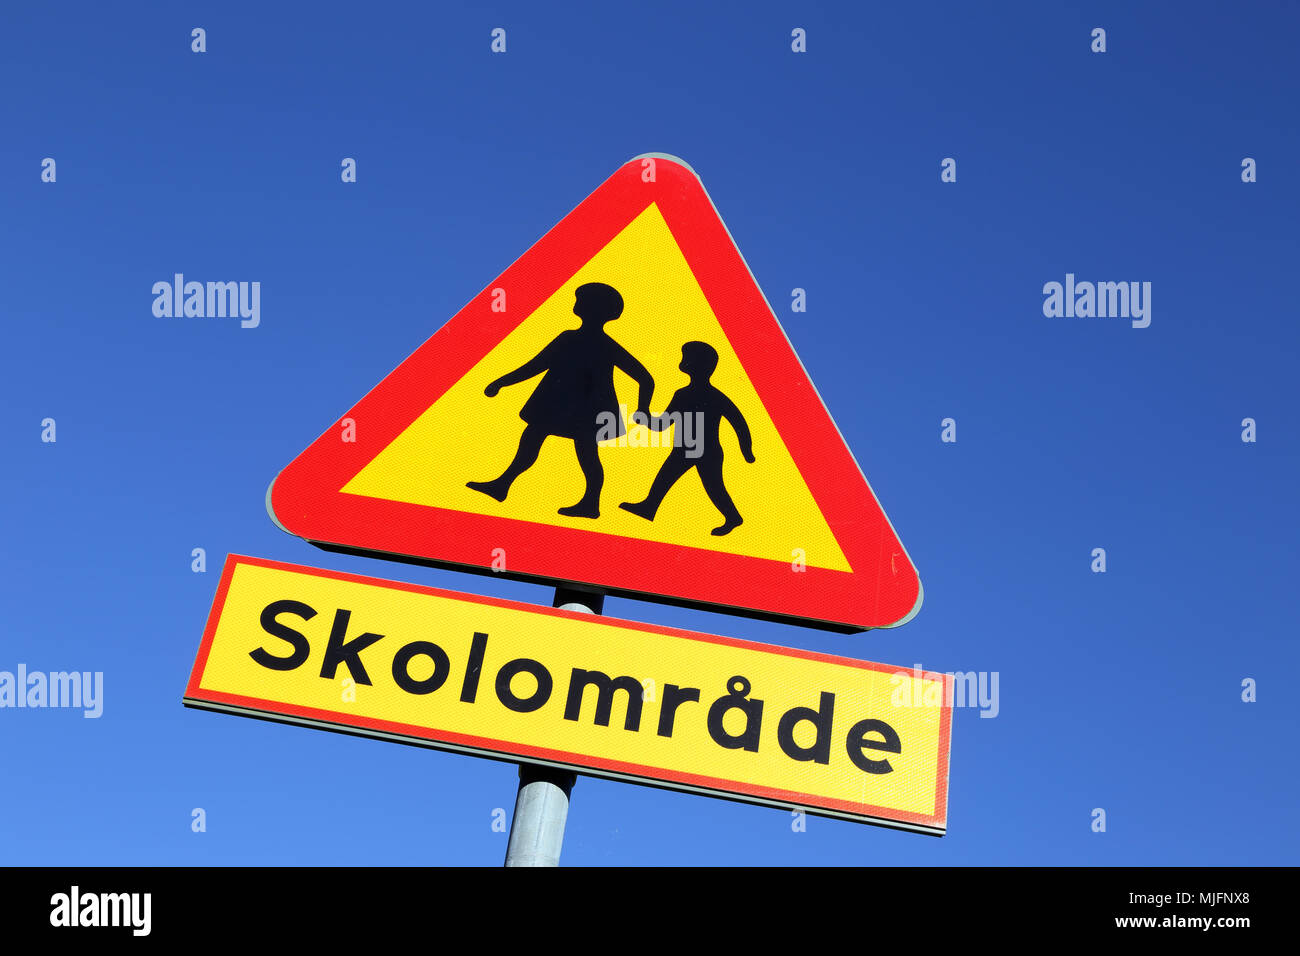 Swedish road sign against blue sky Warning for Children - School zone. Stock Photo